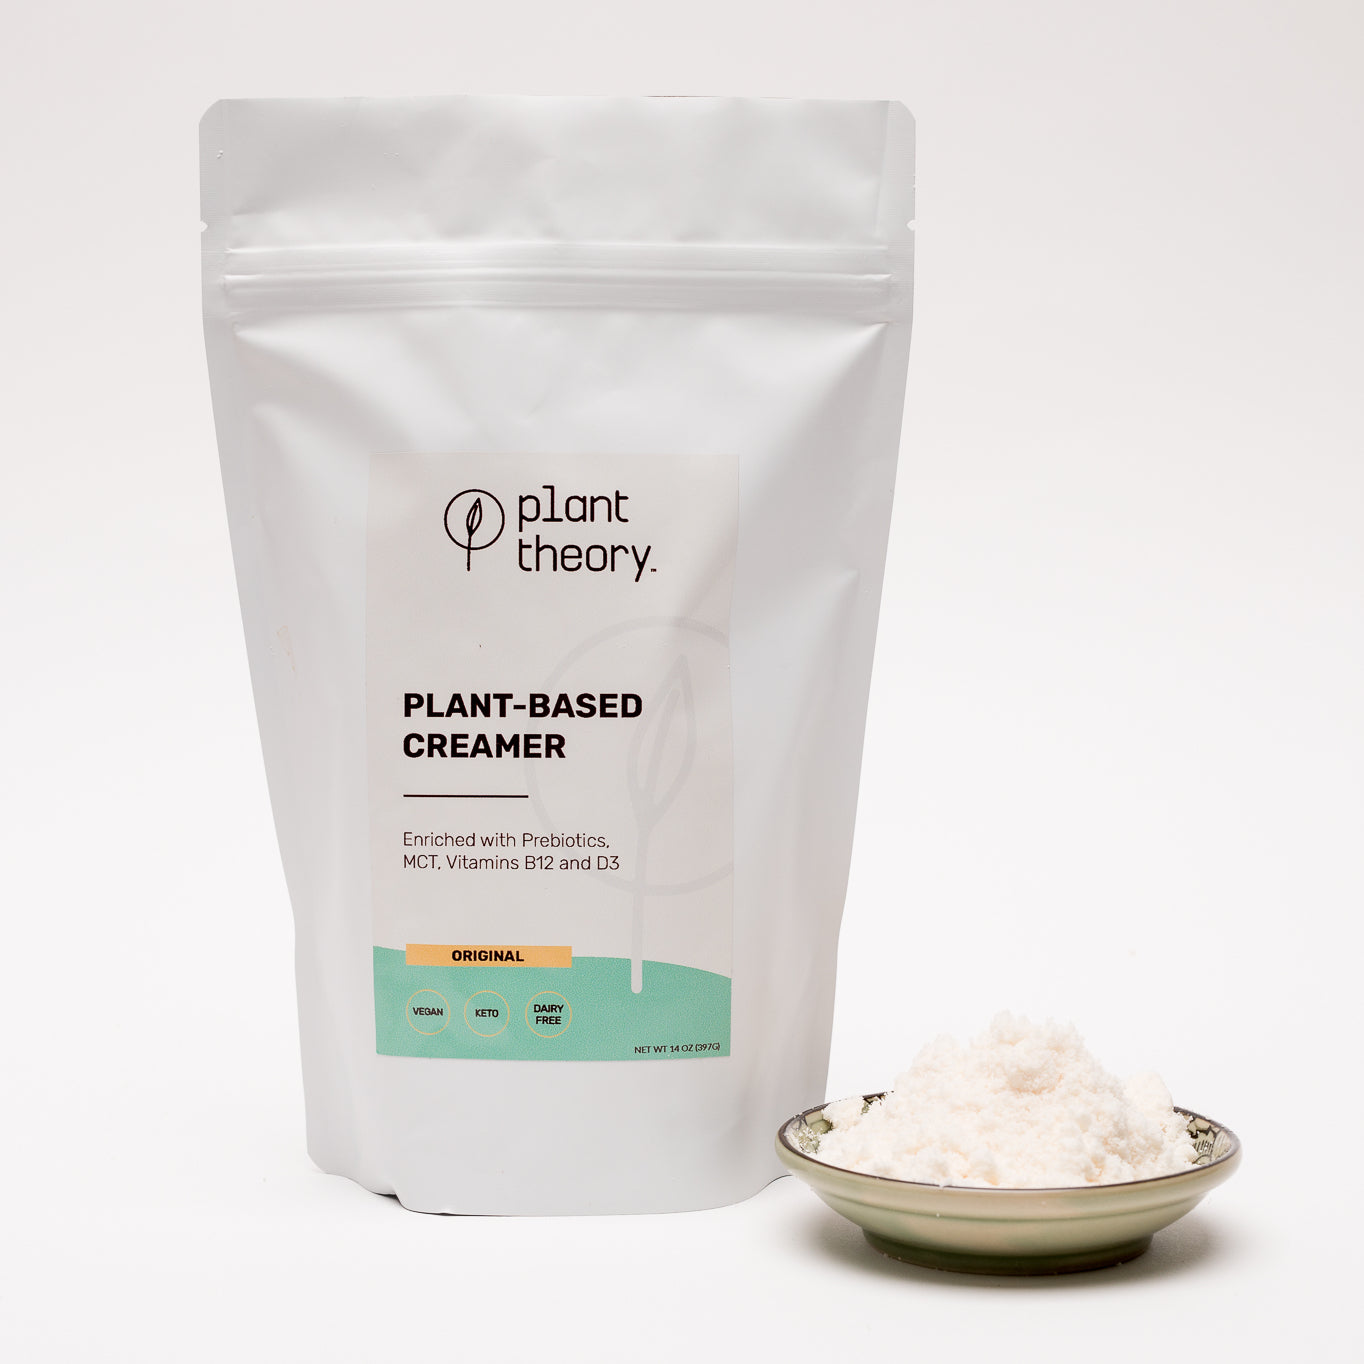 Original Plant-Based Creamer